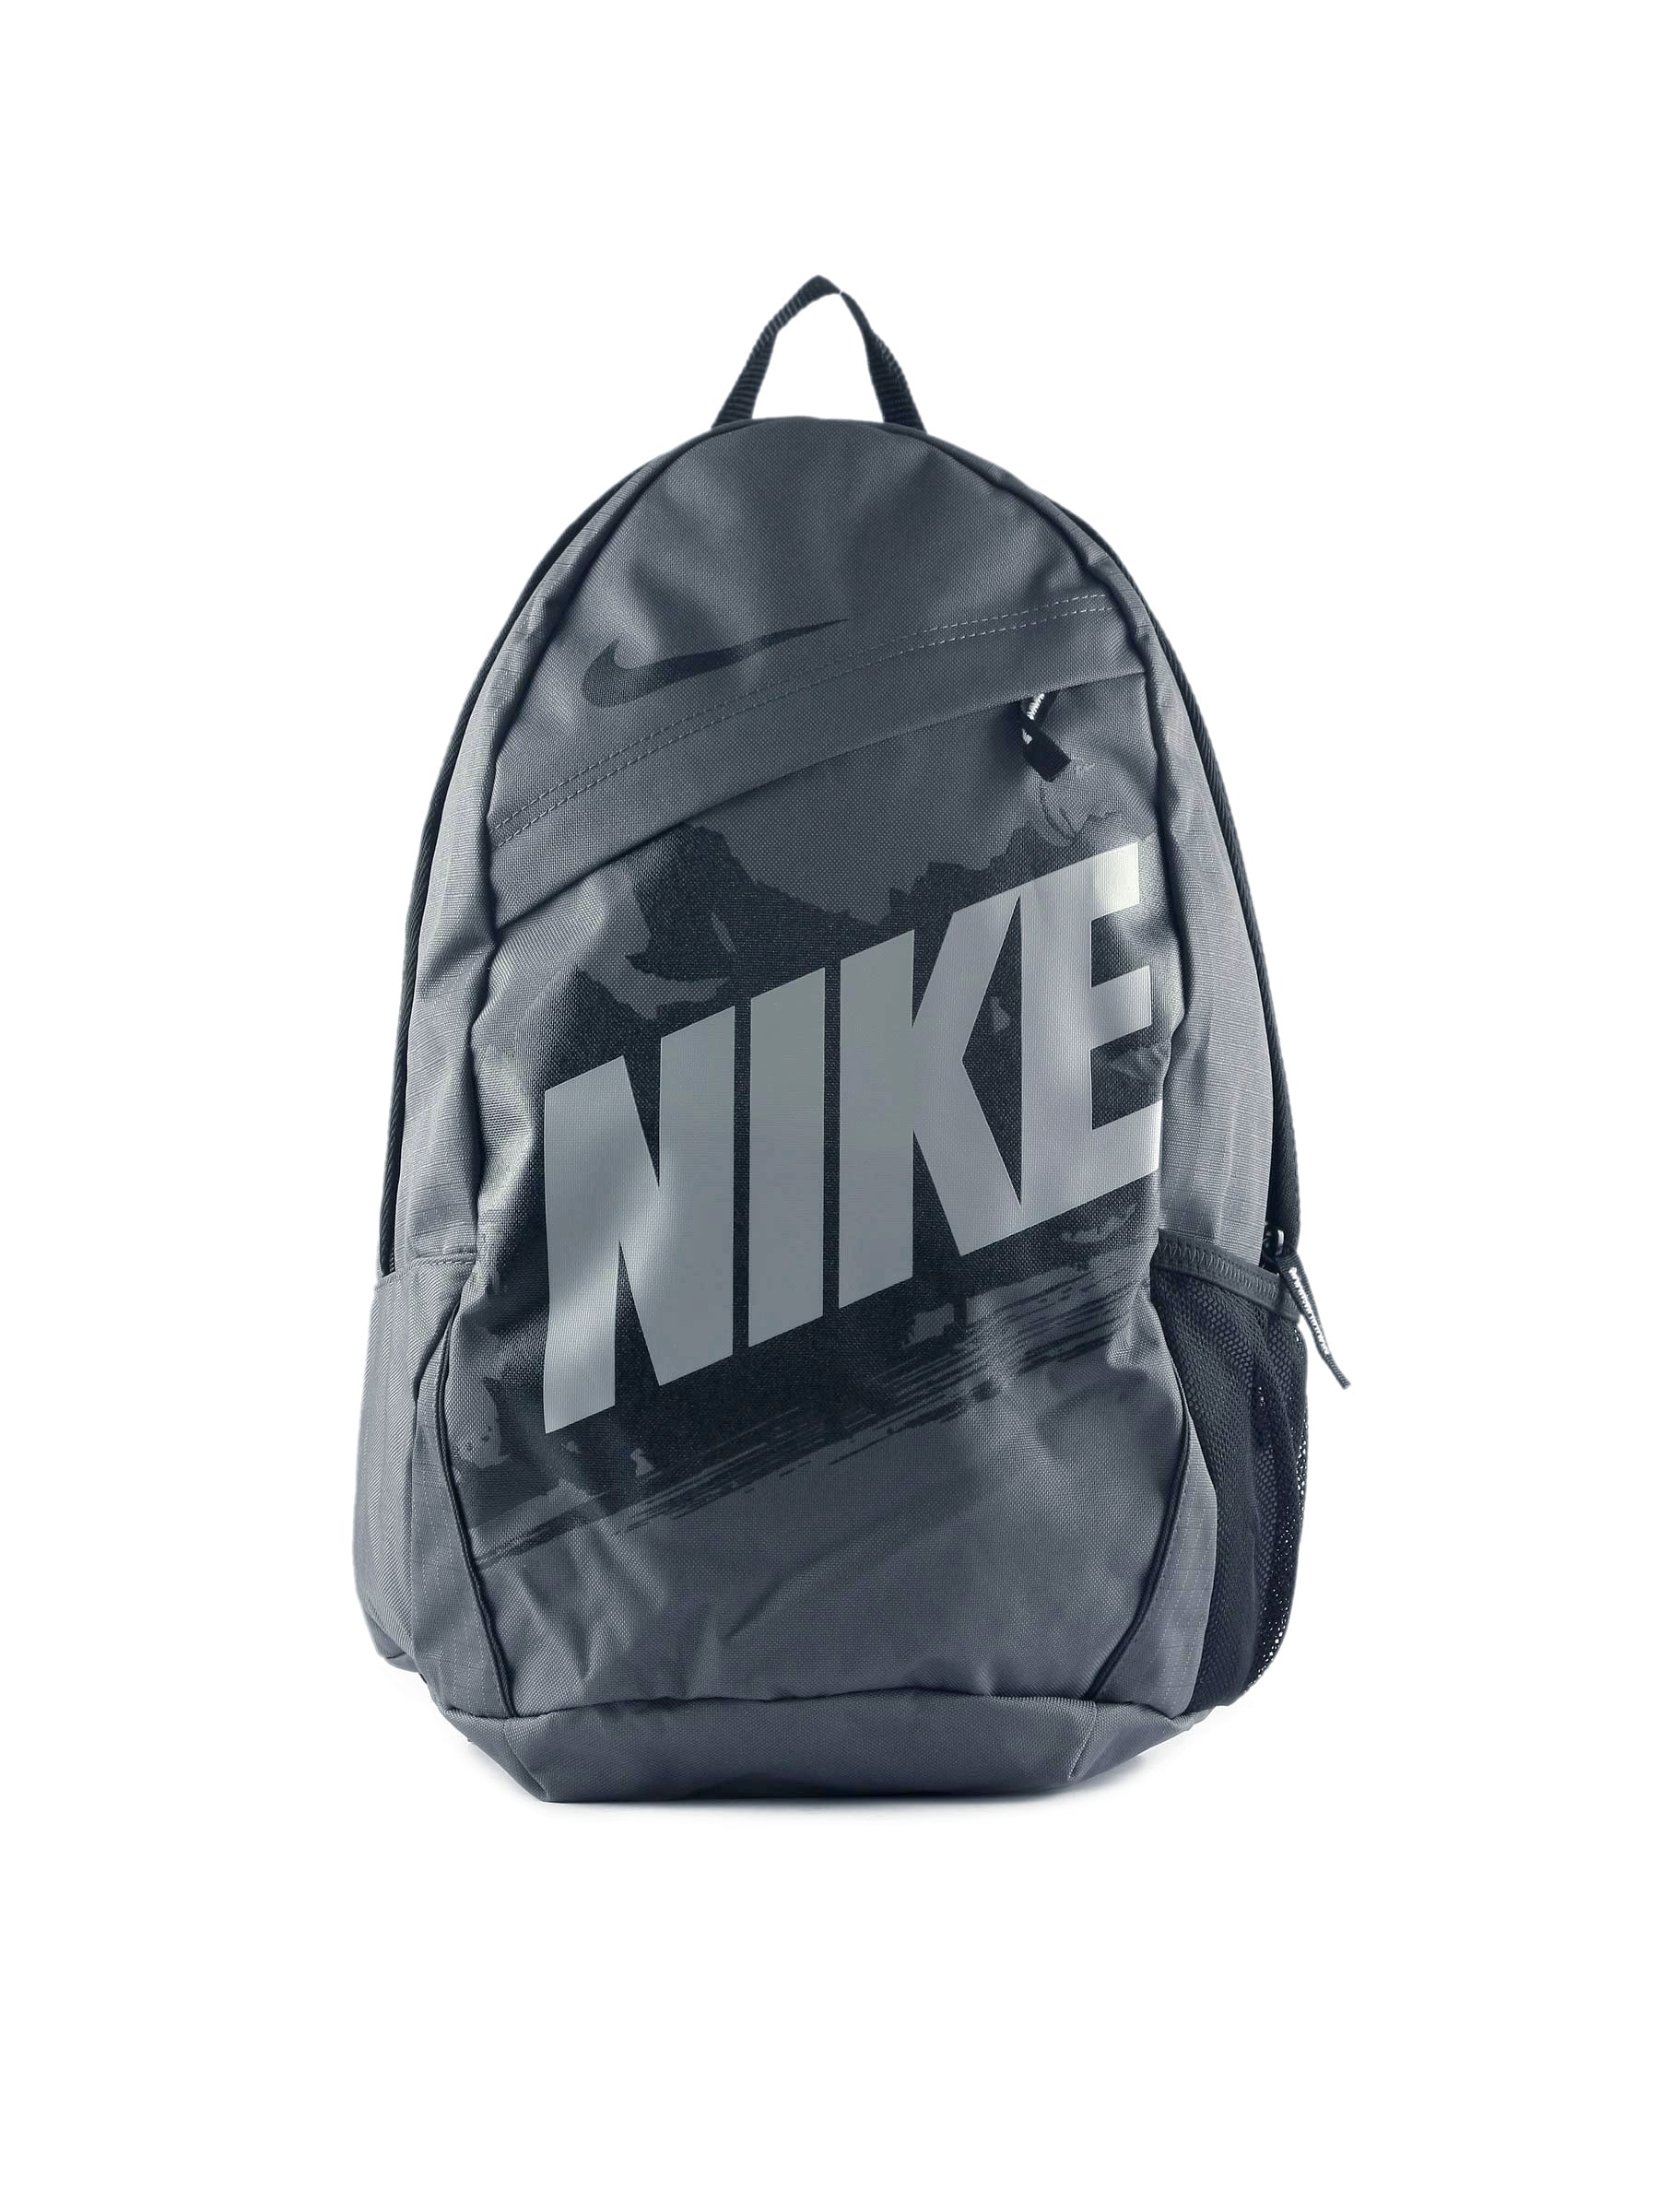 Nike Unisex Casual Grey Backpack